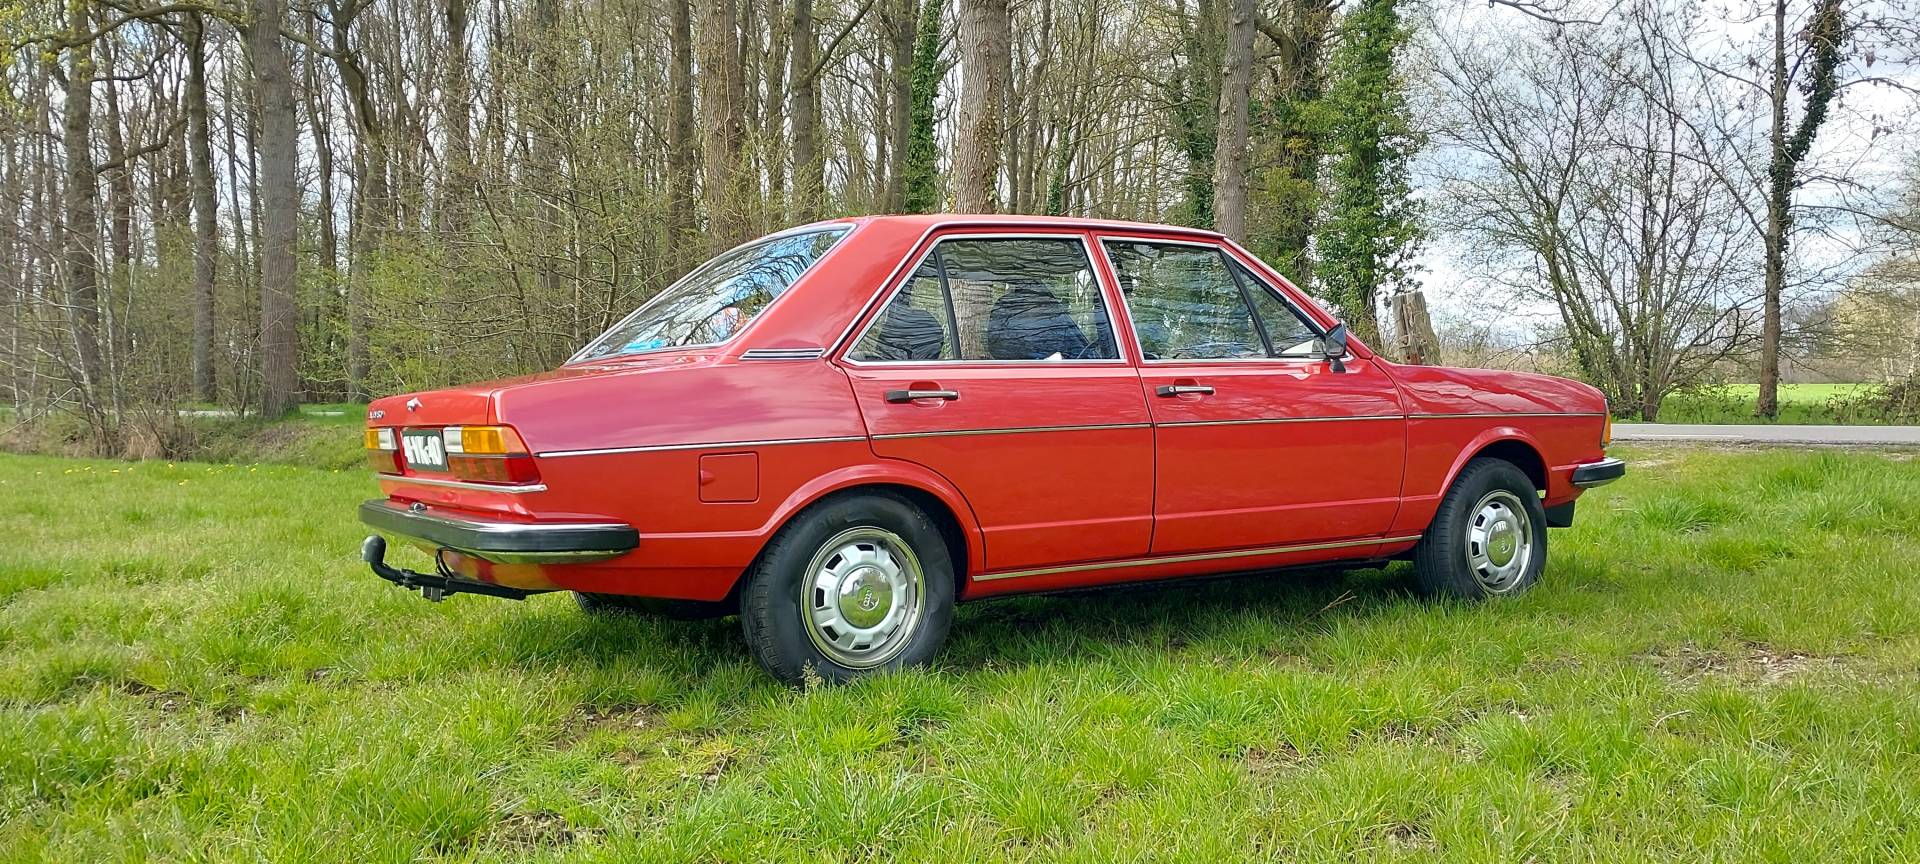 For Sale: Audi 80 GLS (1978) offered for €8,950